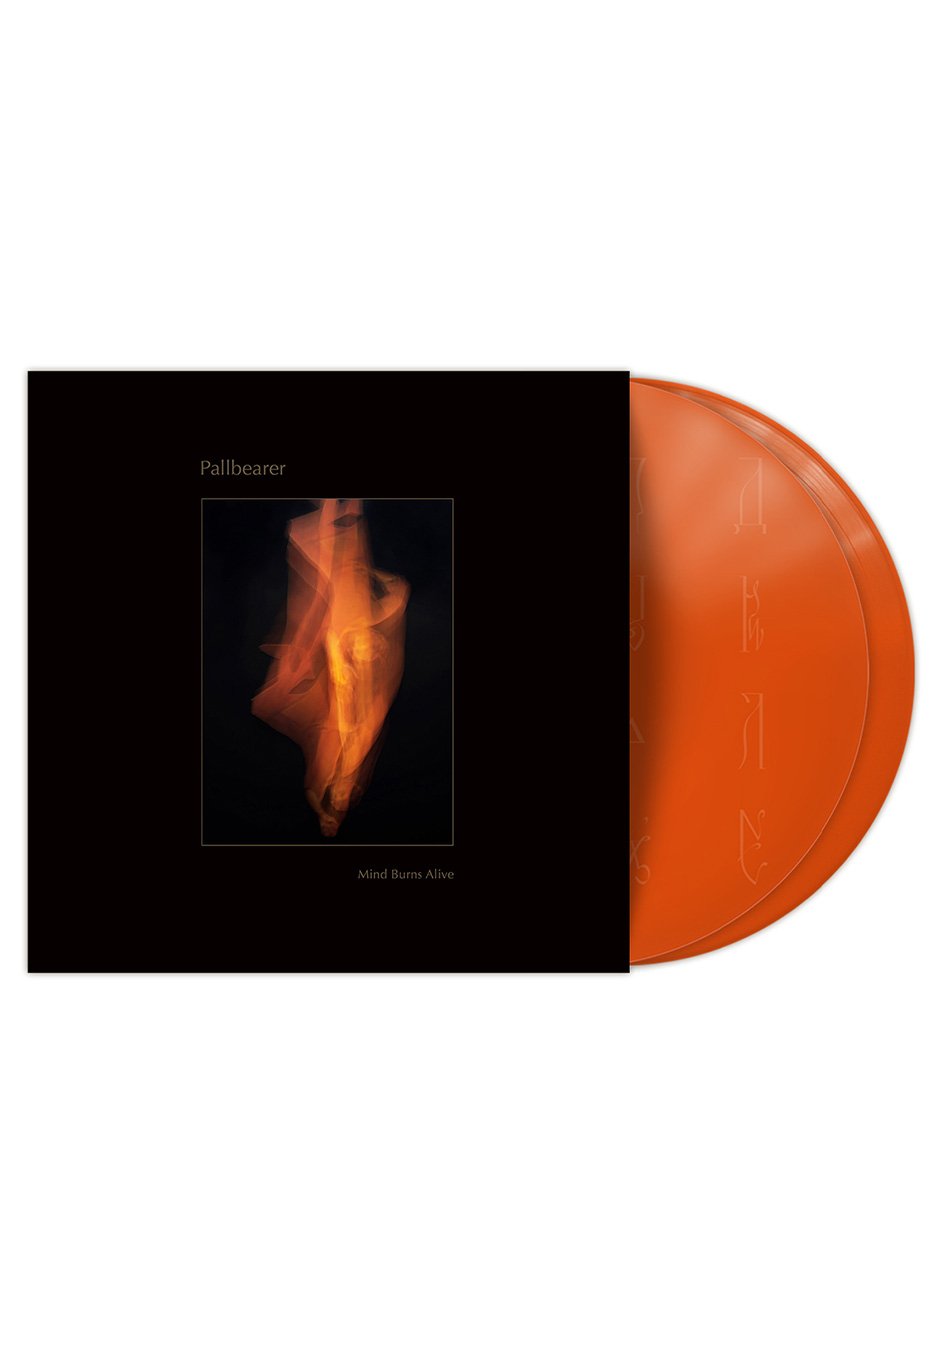 Pallbearer - Mind Burns Alive Ltd. Orange Crush - Colored Vinyl